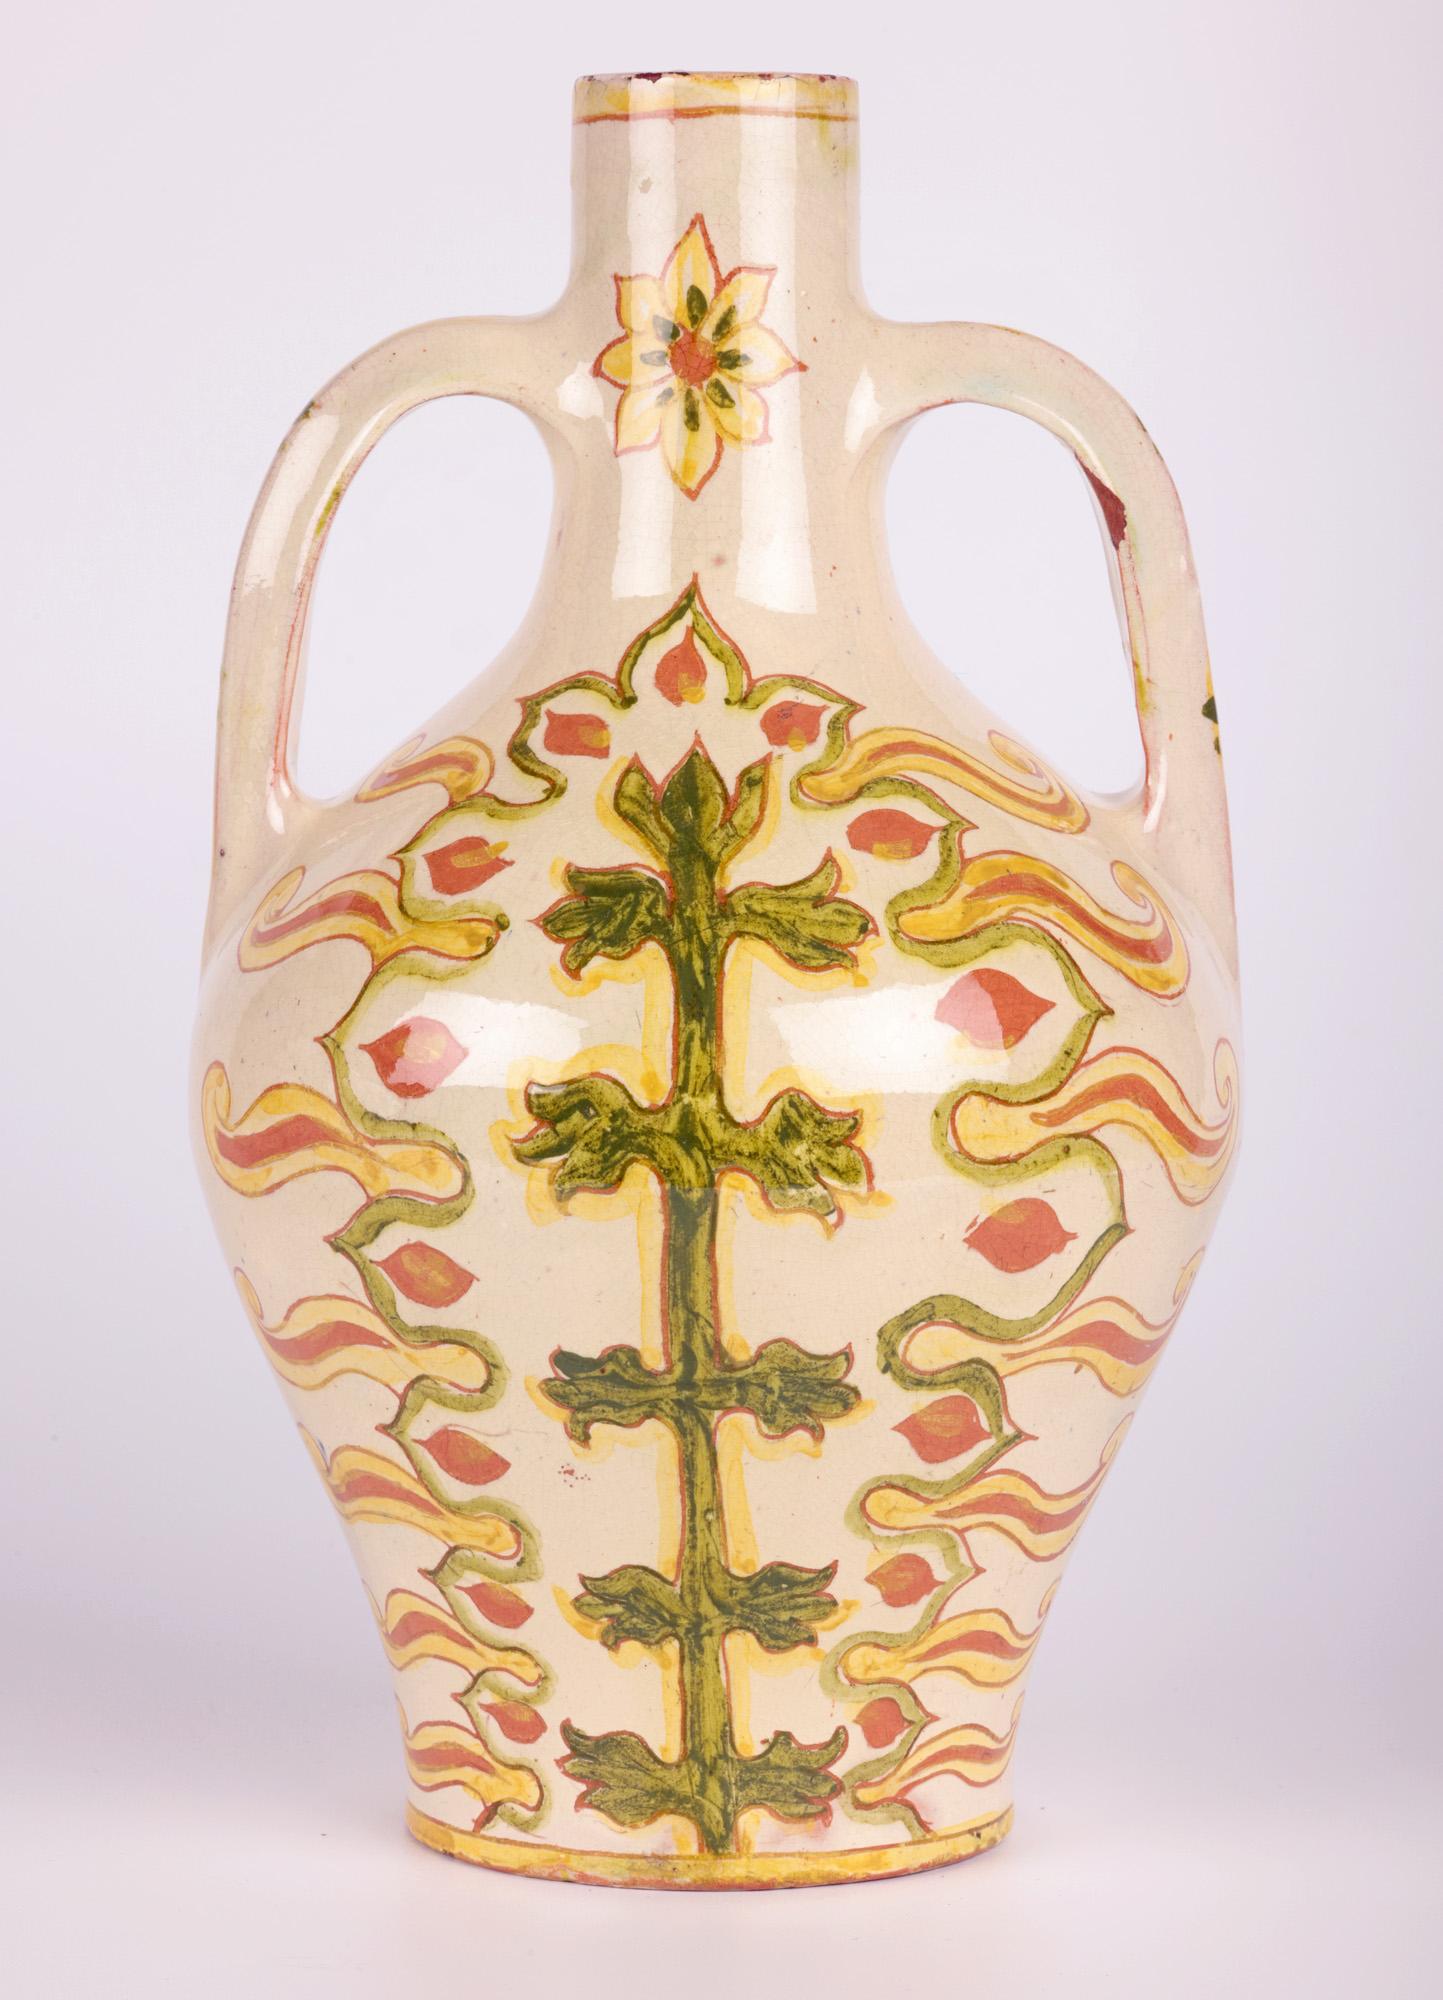 Lizzie Wilkins Della Robbia Birkenhead Arts & Crafts Vase For Sale 2